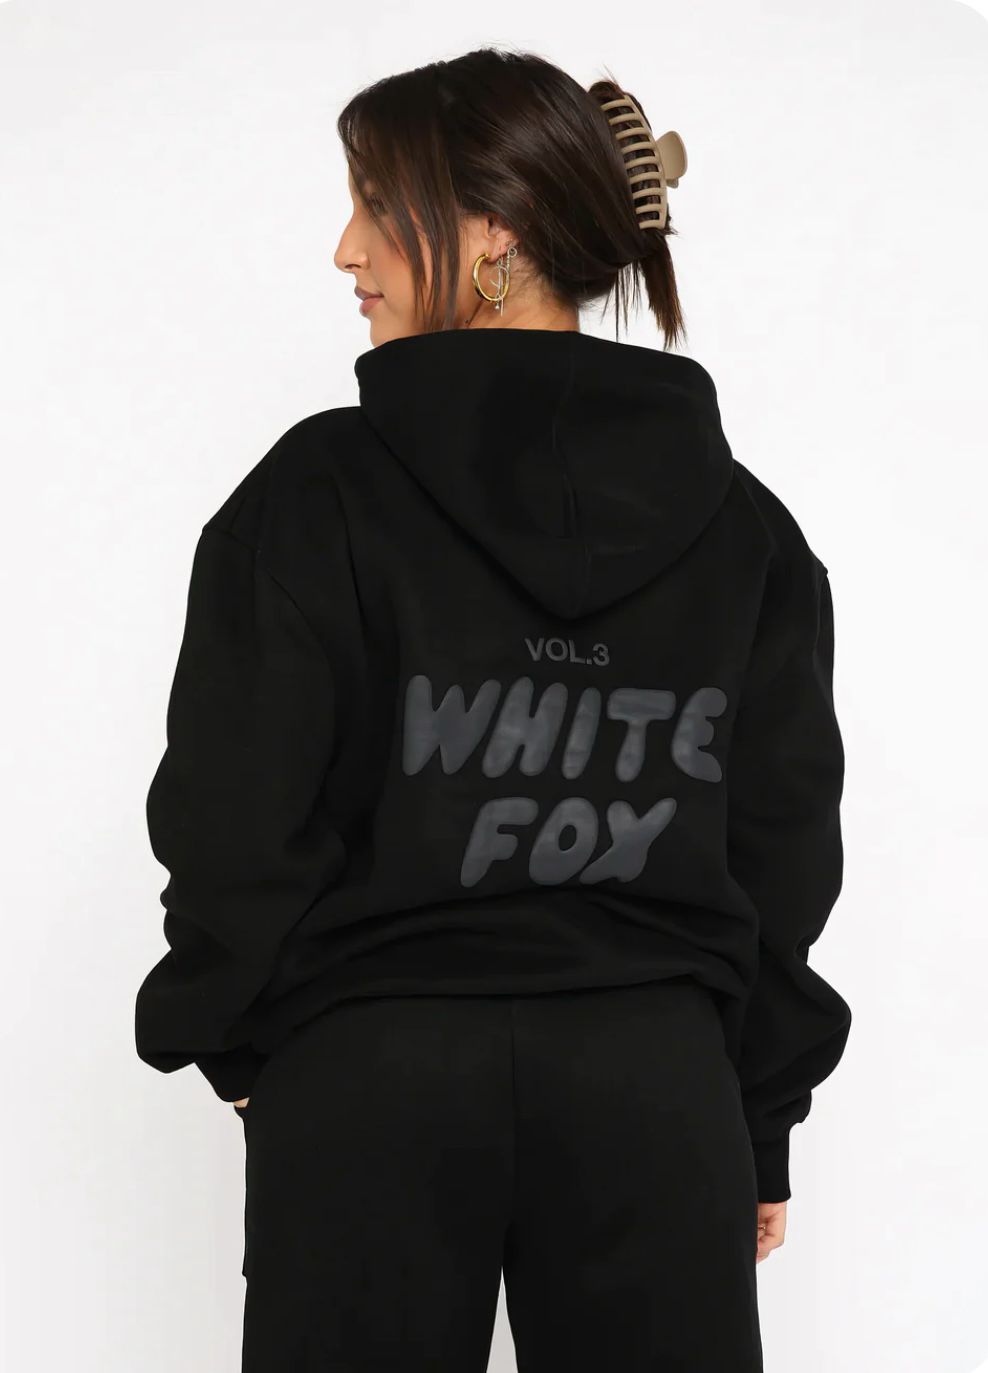 Veronica- White fox traningspak